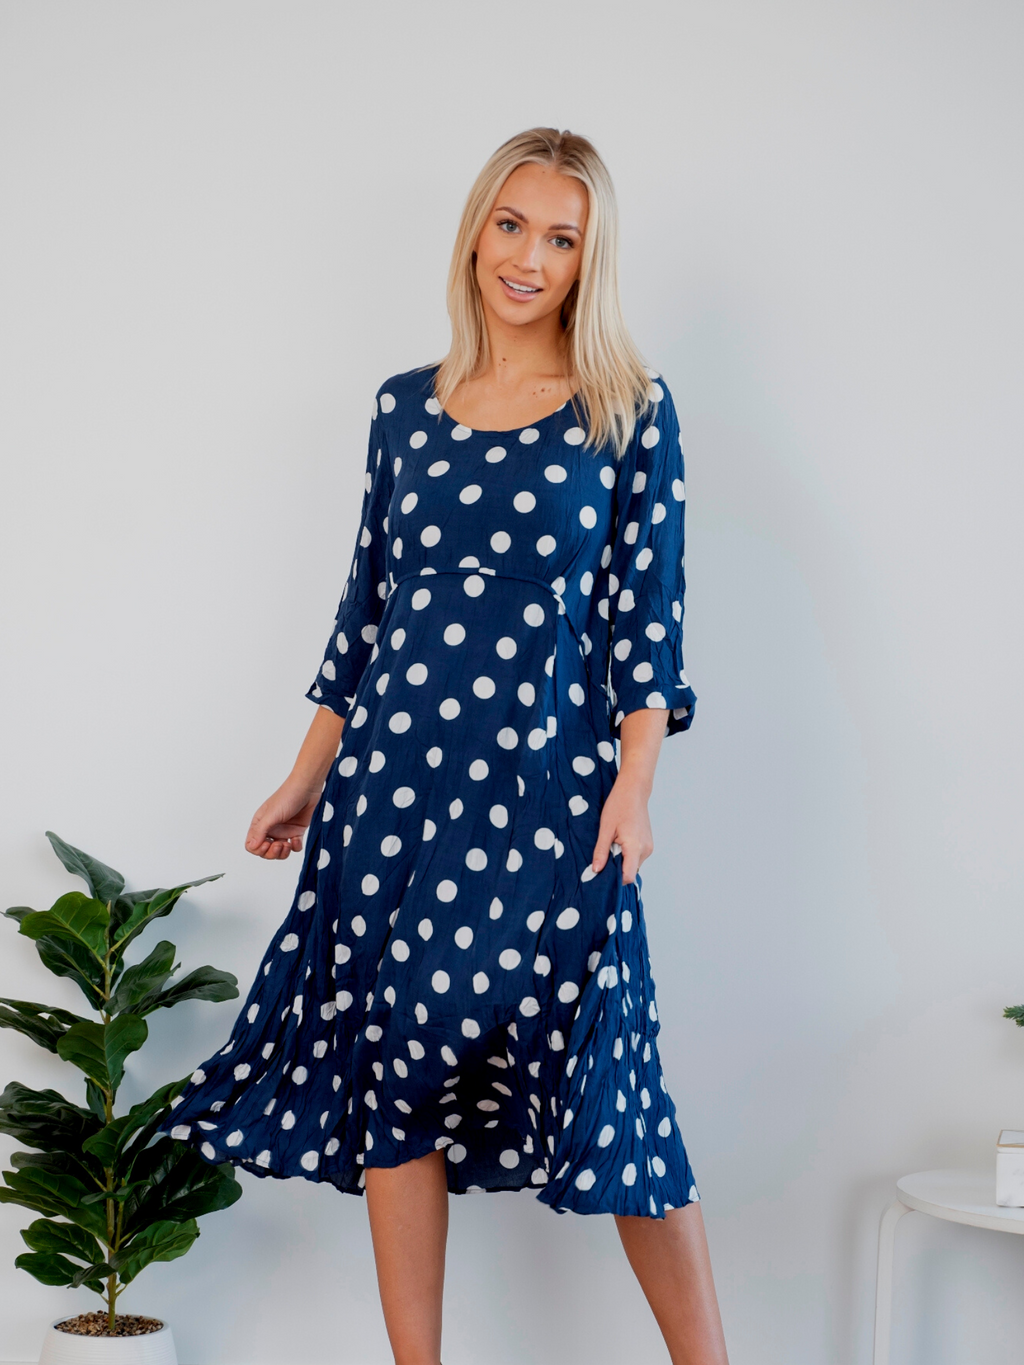 New flattering dresses for all occasions | Dressxox Australia